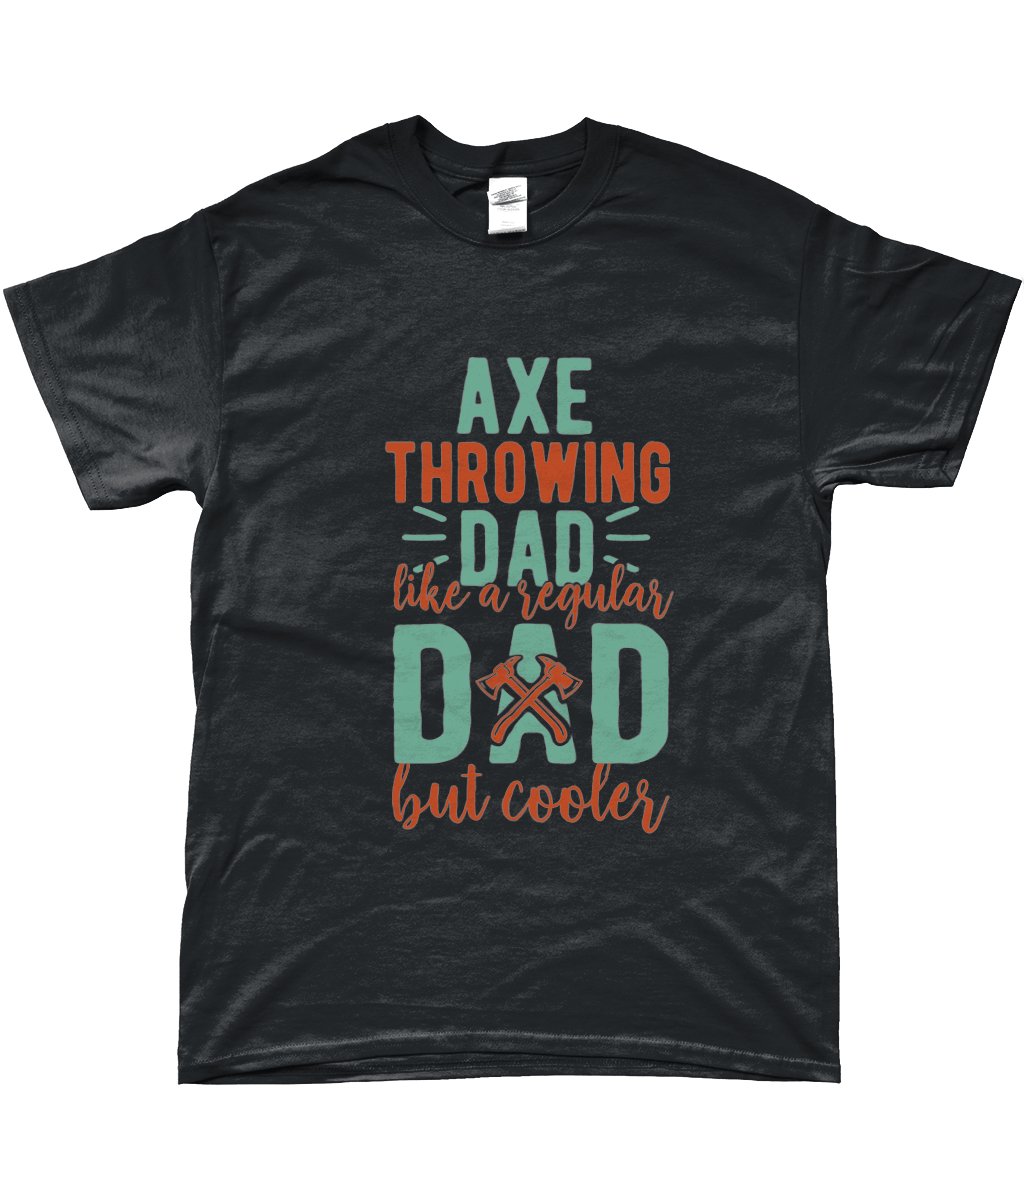 axe throwing dad | shirt